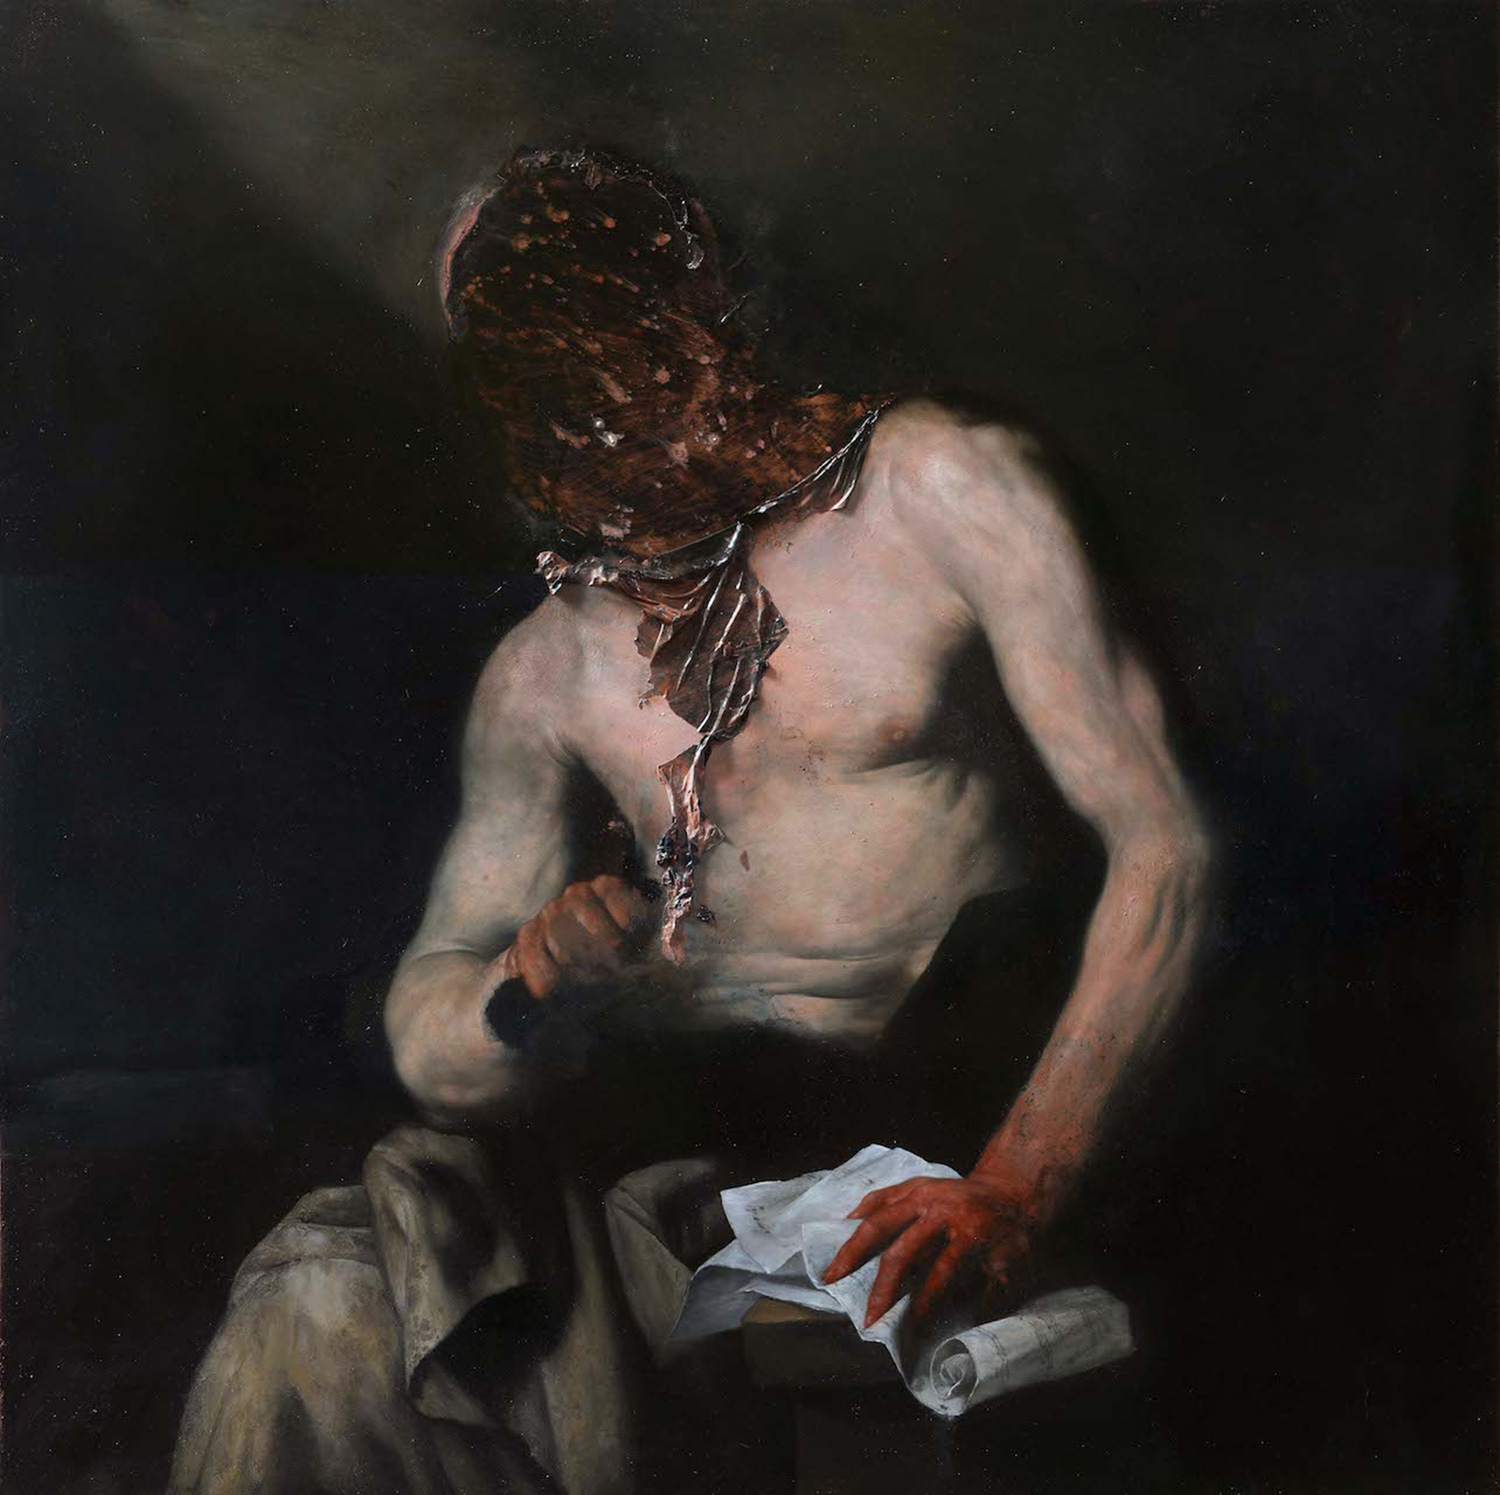 The Nature Of Fear Nicola Samori Painting Horror Baroque Portraiture Classical 1500x1495